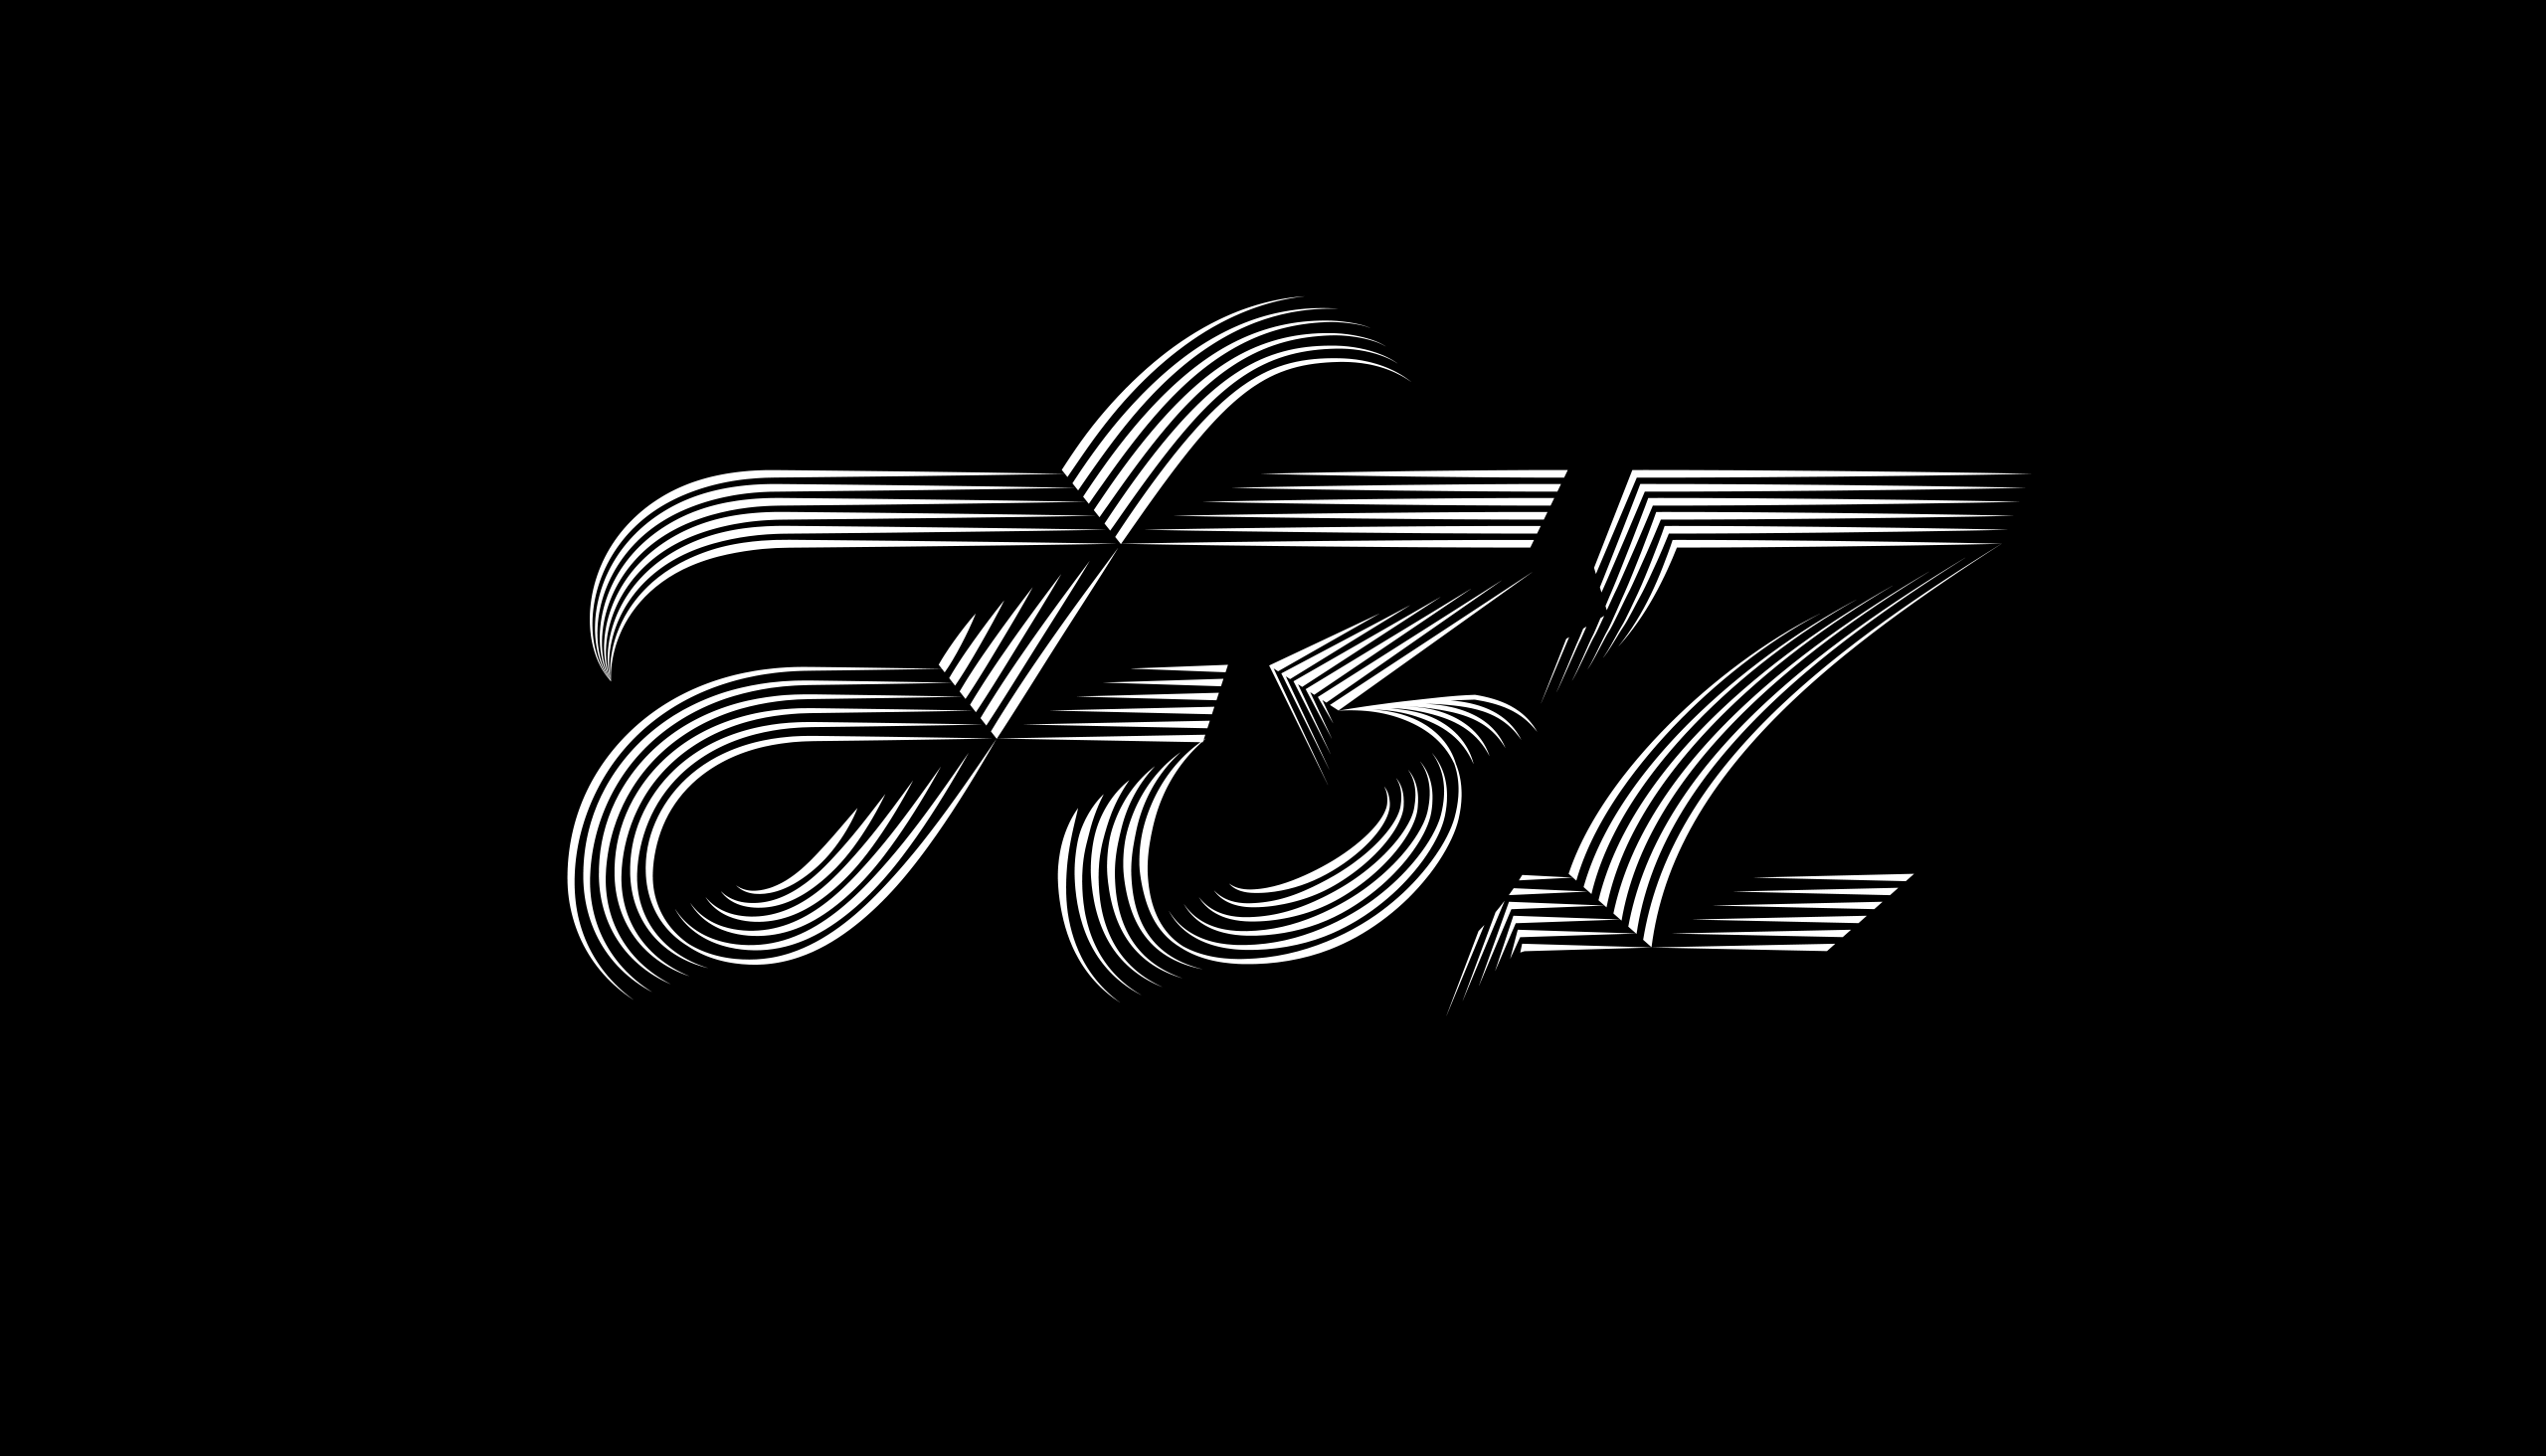 F37 logo illustration 2 by Dan Forster